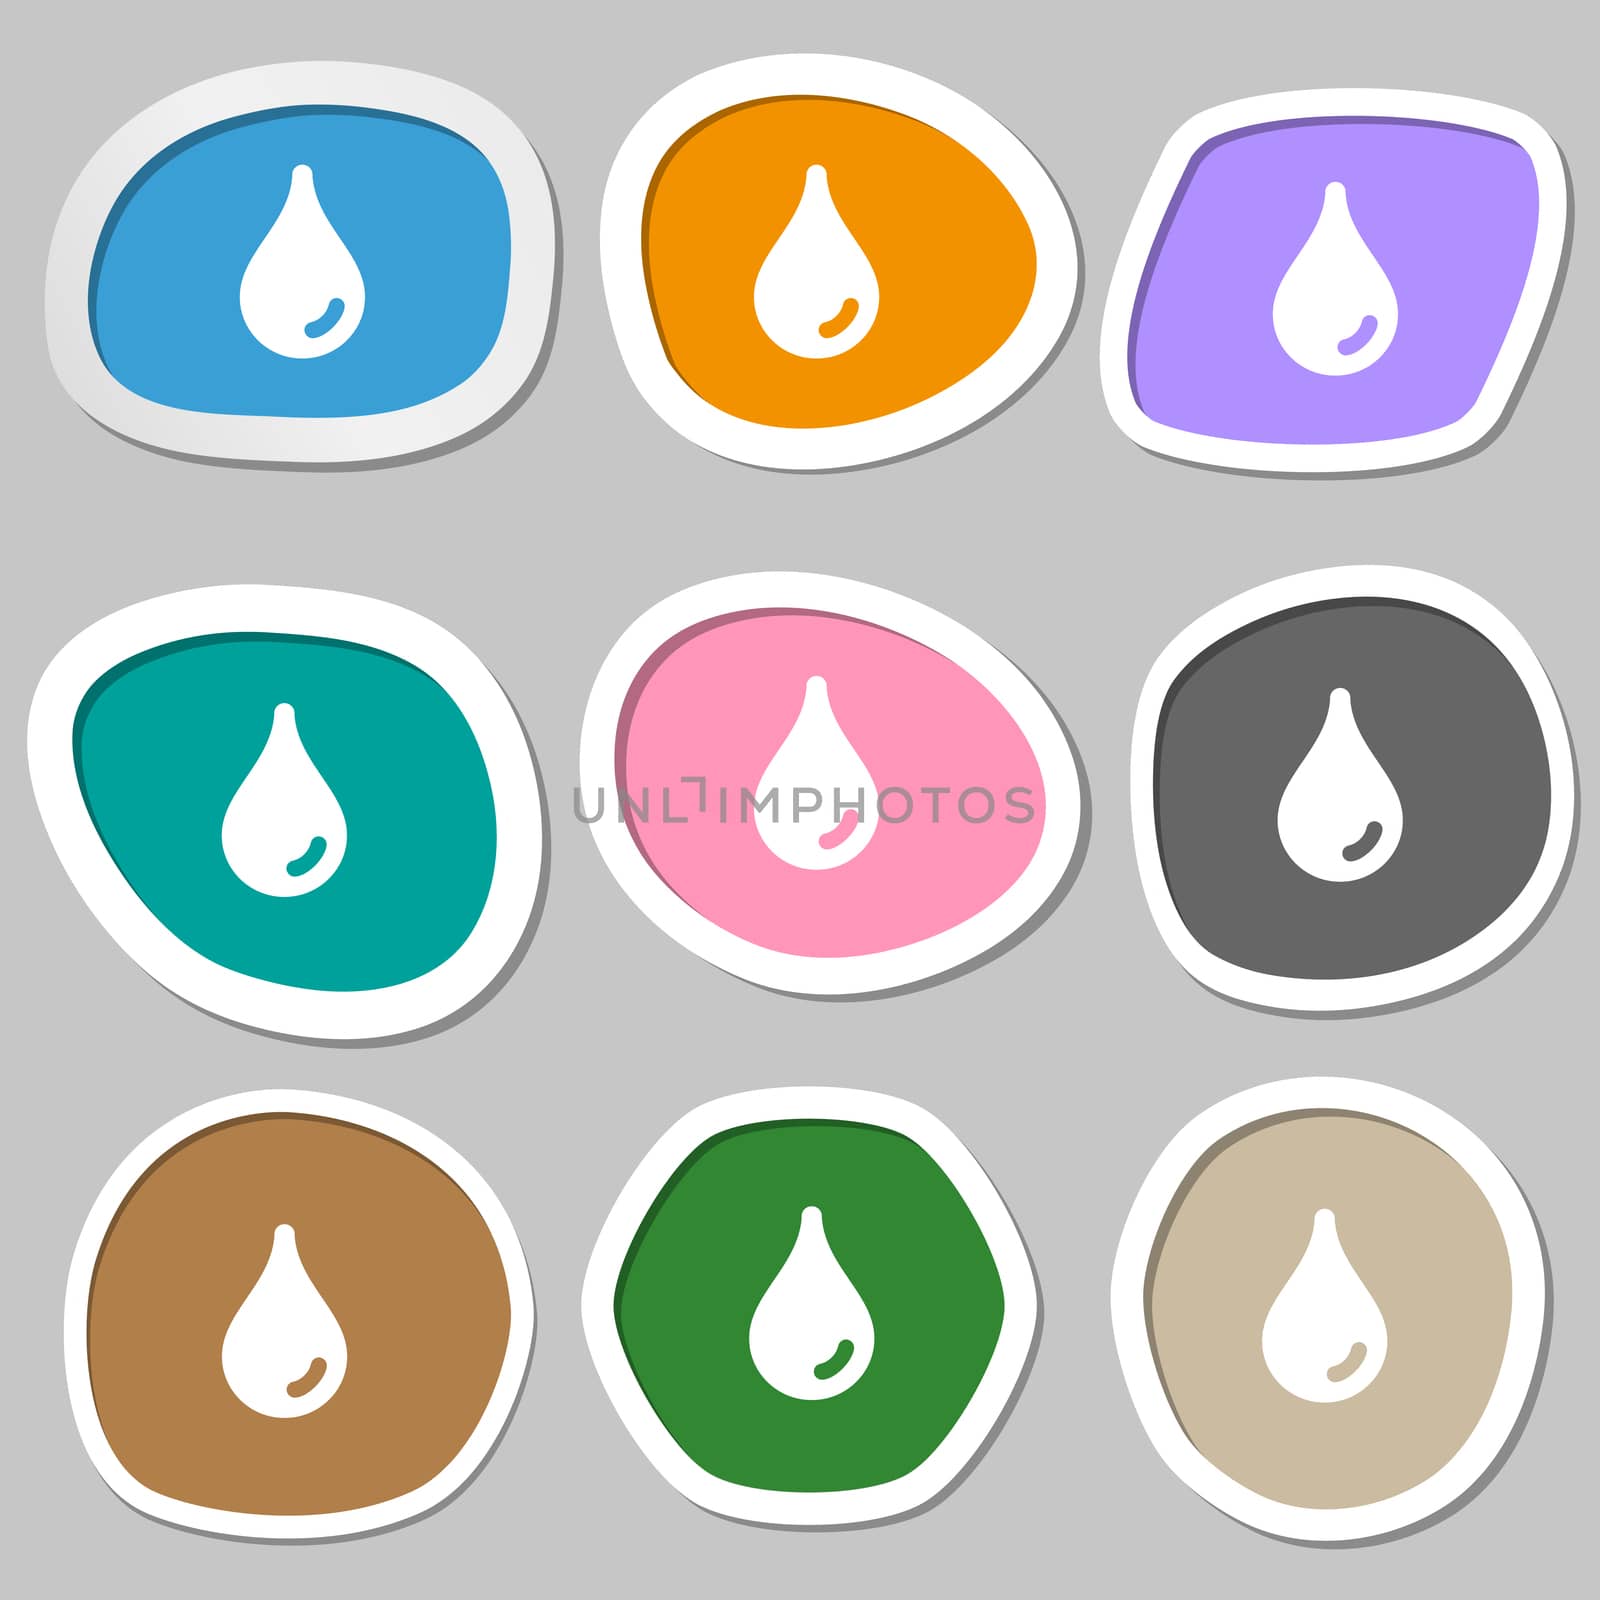 Water drop icon symbols. Multicolored paper stickers. illustration